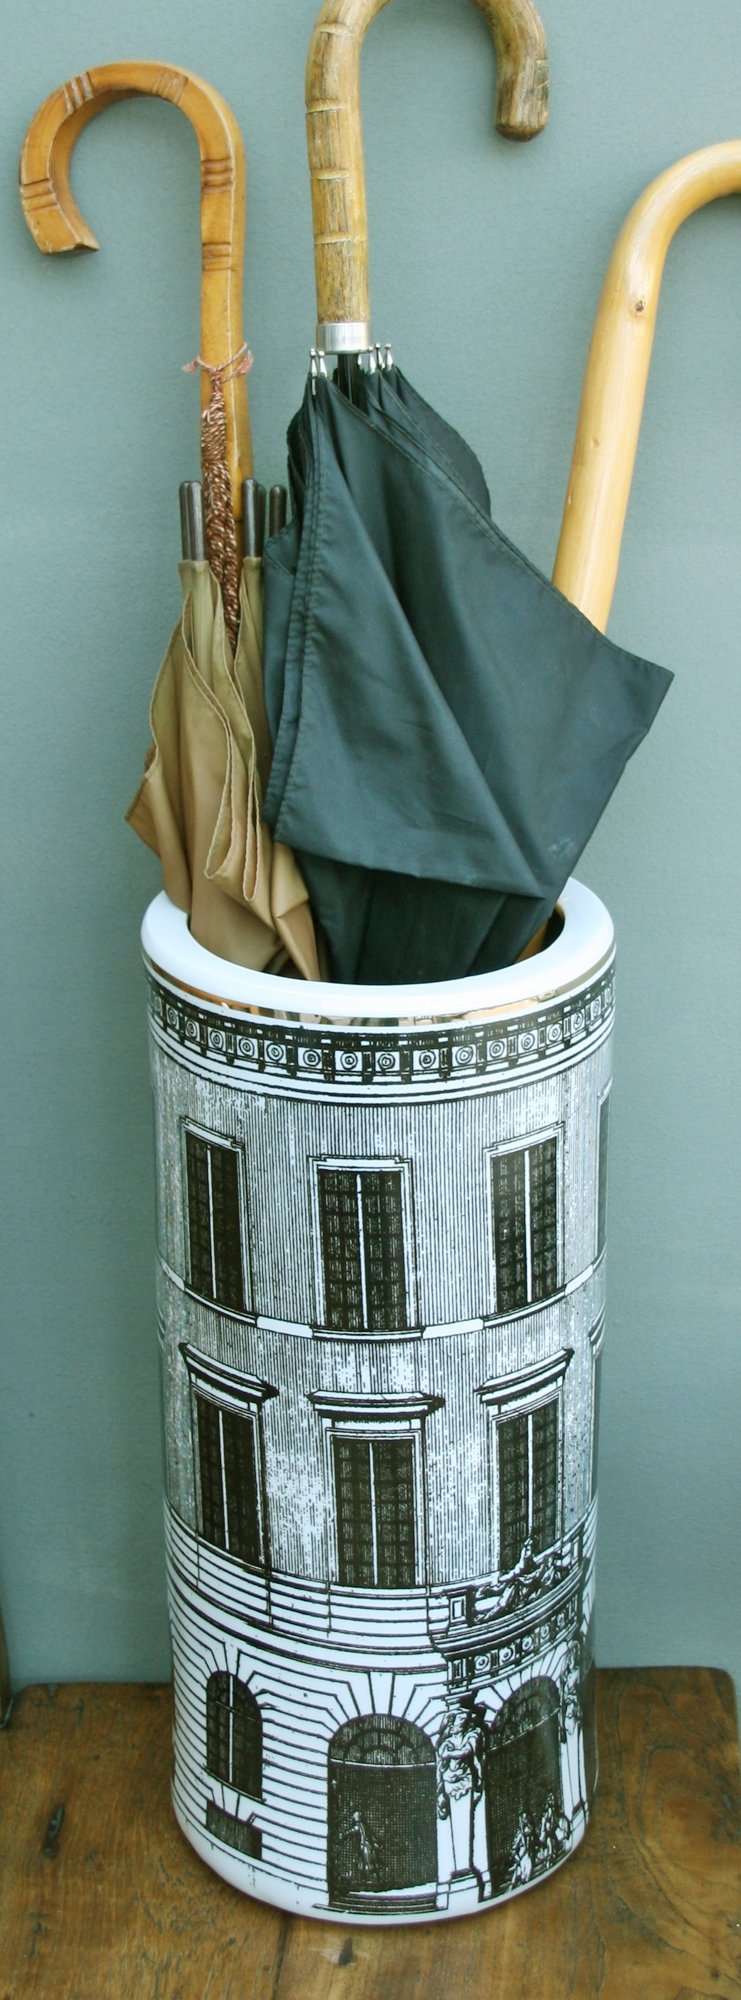 Ceramic Umbrella Stand, Monochrome Building Design